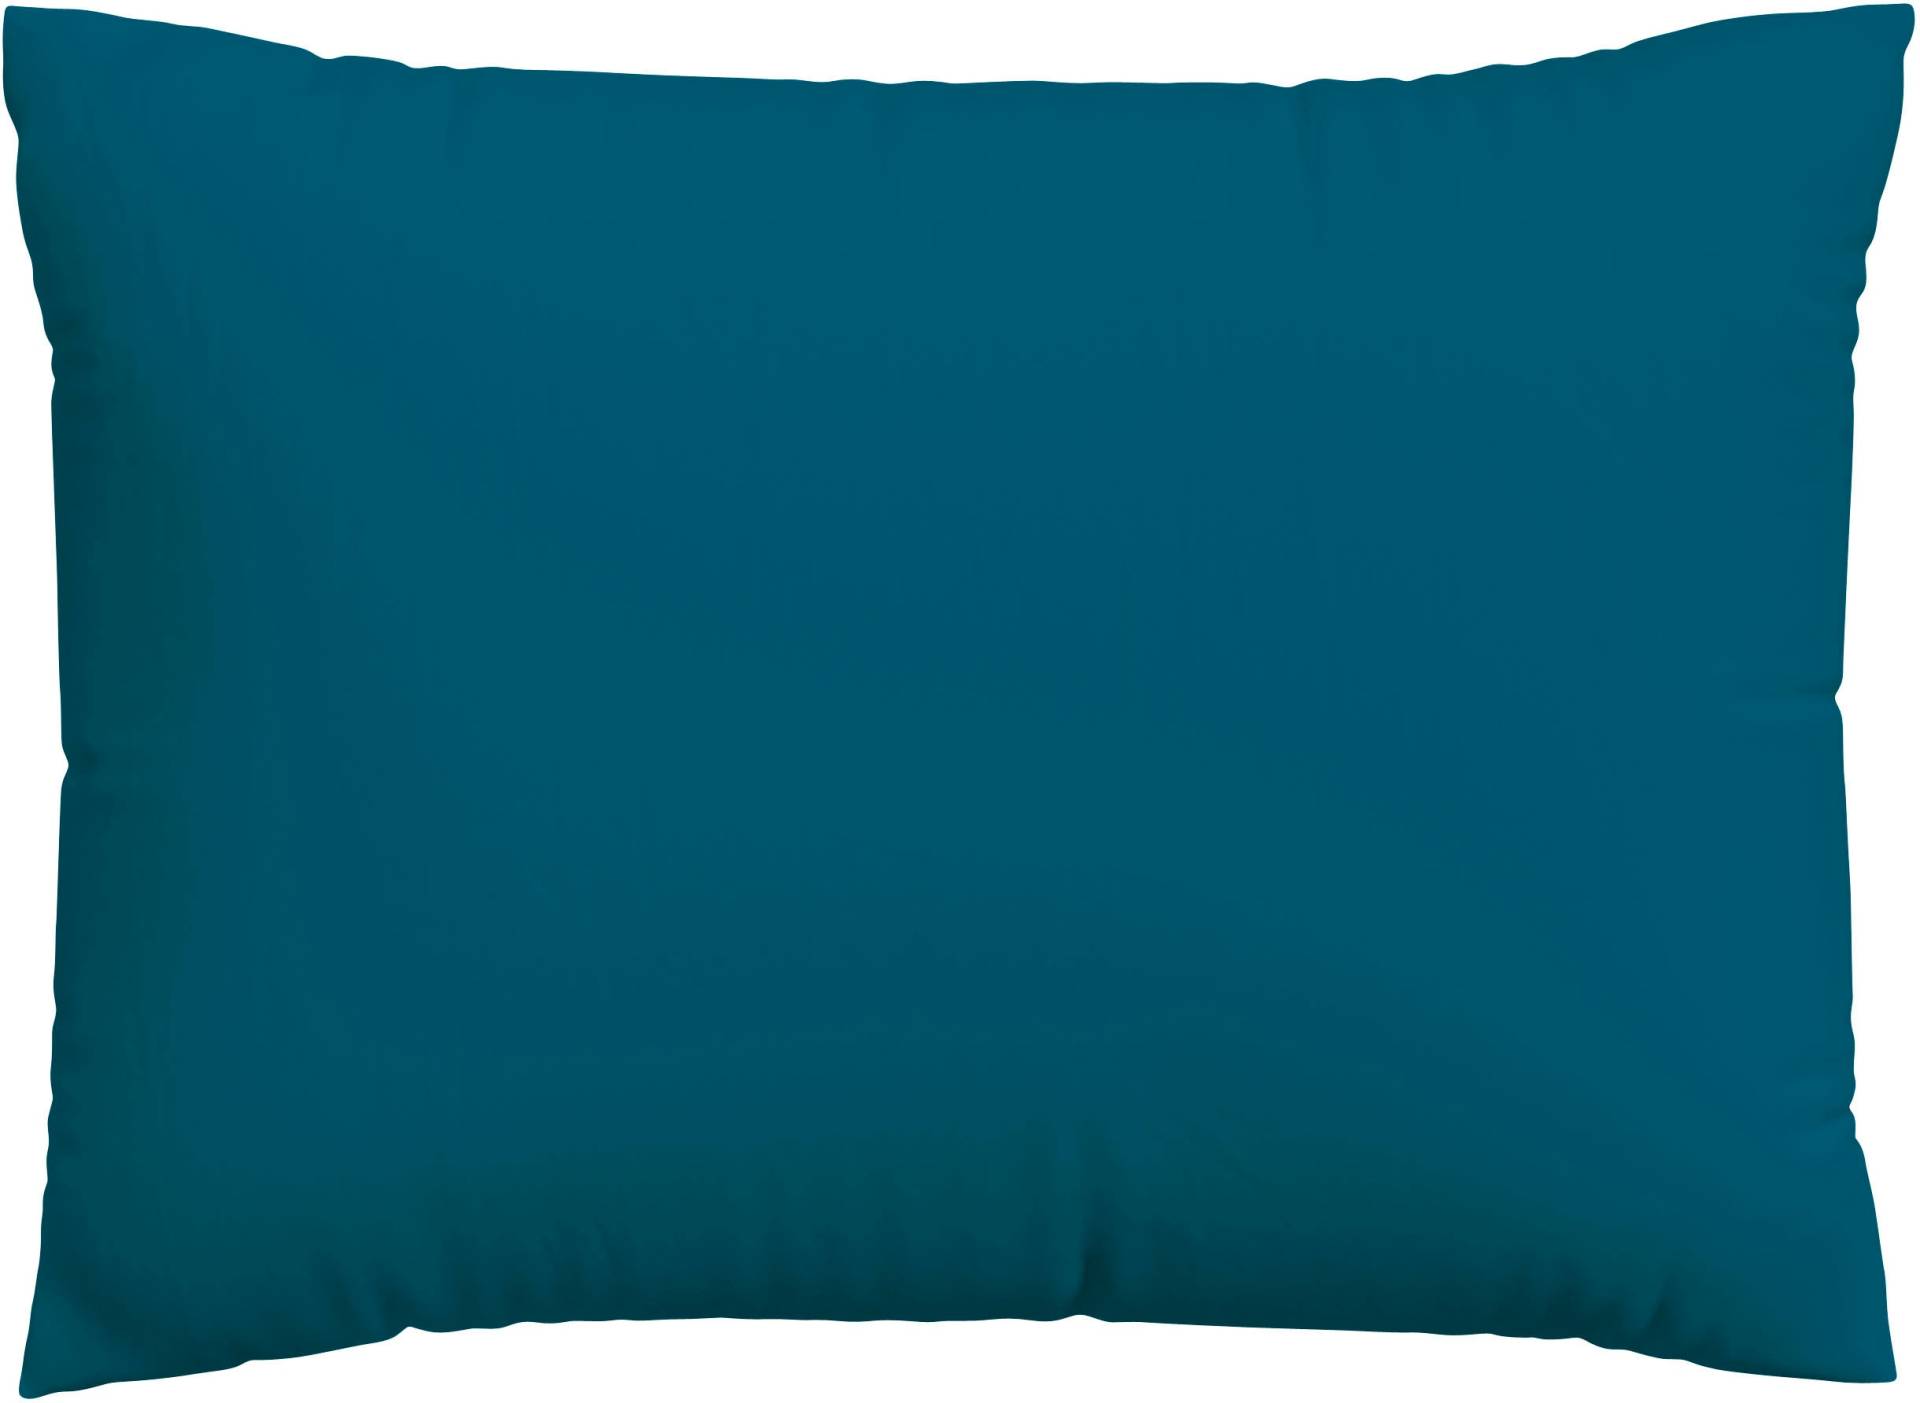 Schlafgut Kissenbezug »Woven Satin aus Mako-Baumwolle, langlebig, pflegeleicht, dicht gewebt«, (1 St.), Kissenhülle mit Reissverschluss, passender Bettbezug erhältlich von Schlafgut